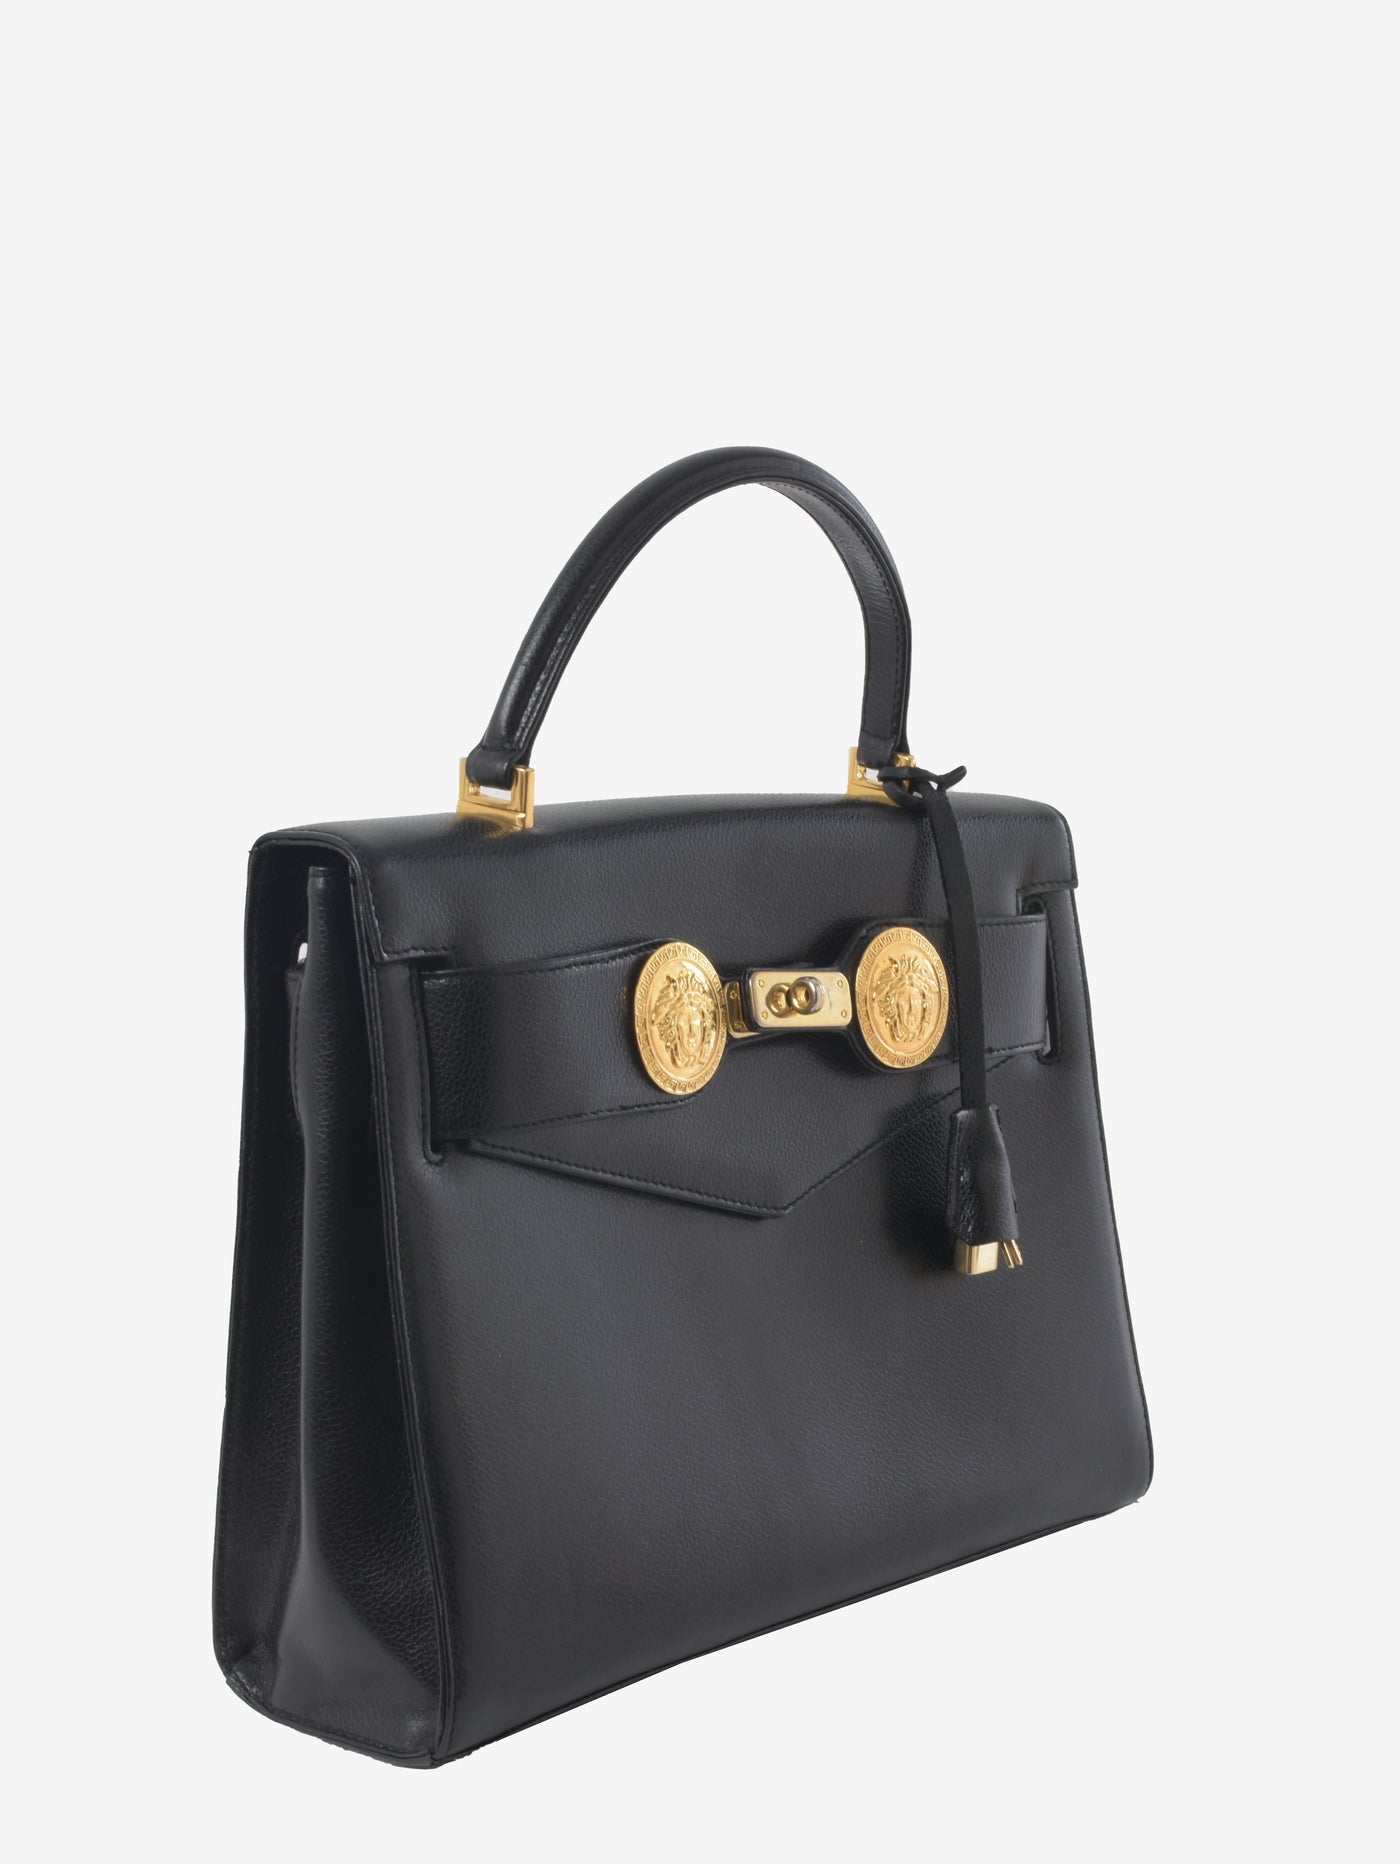 Gianni Versace Medusa Handbag